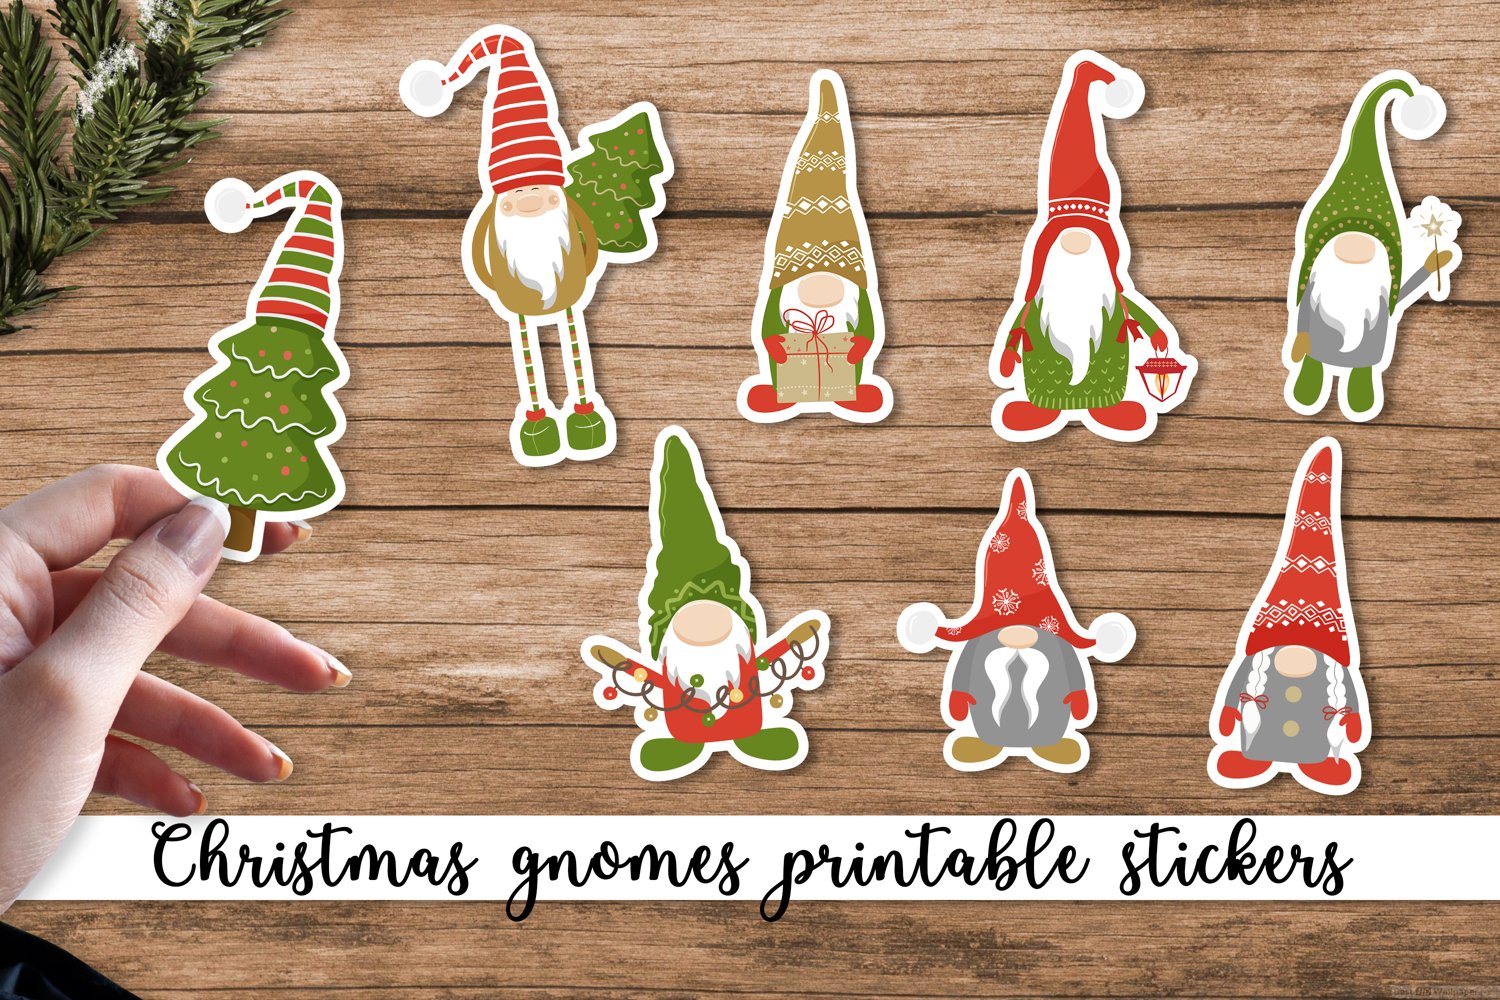 Christmas gnomes printable stickers.